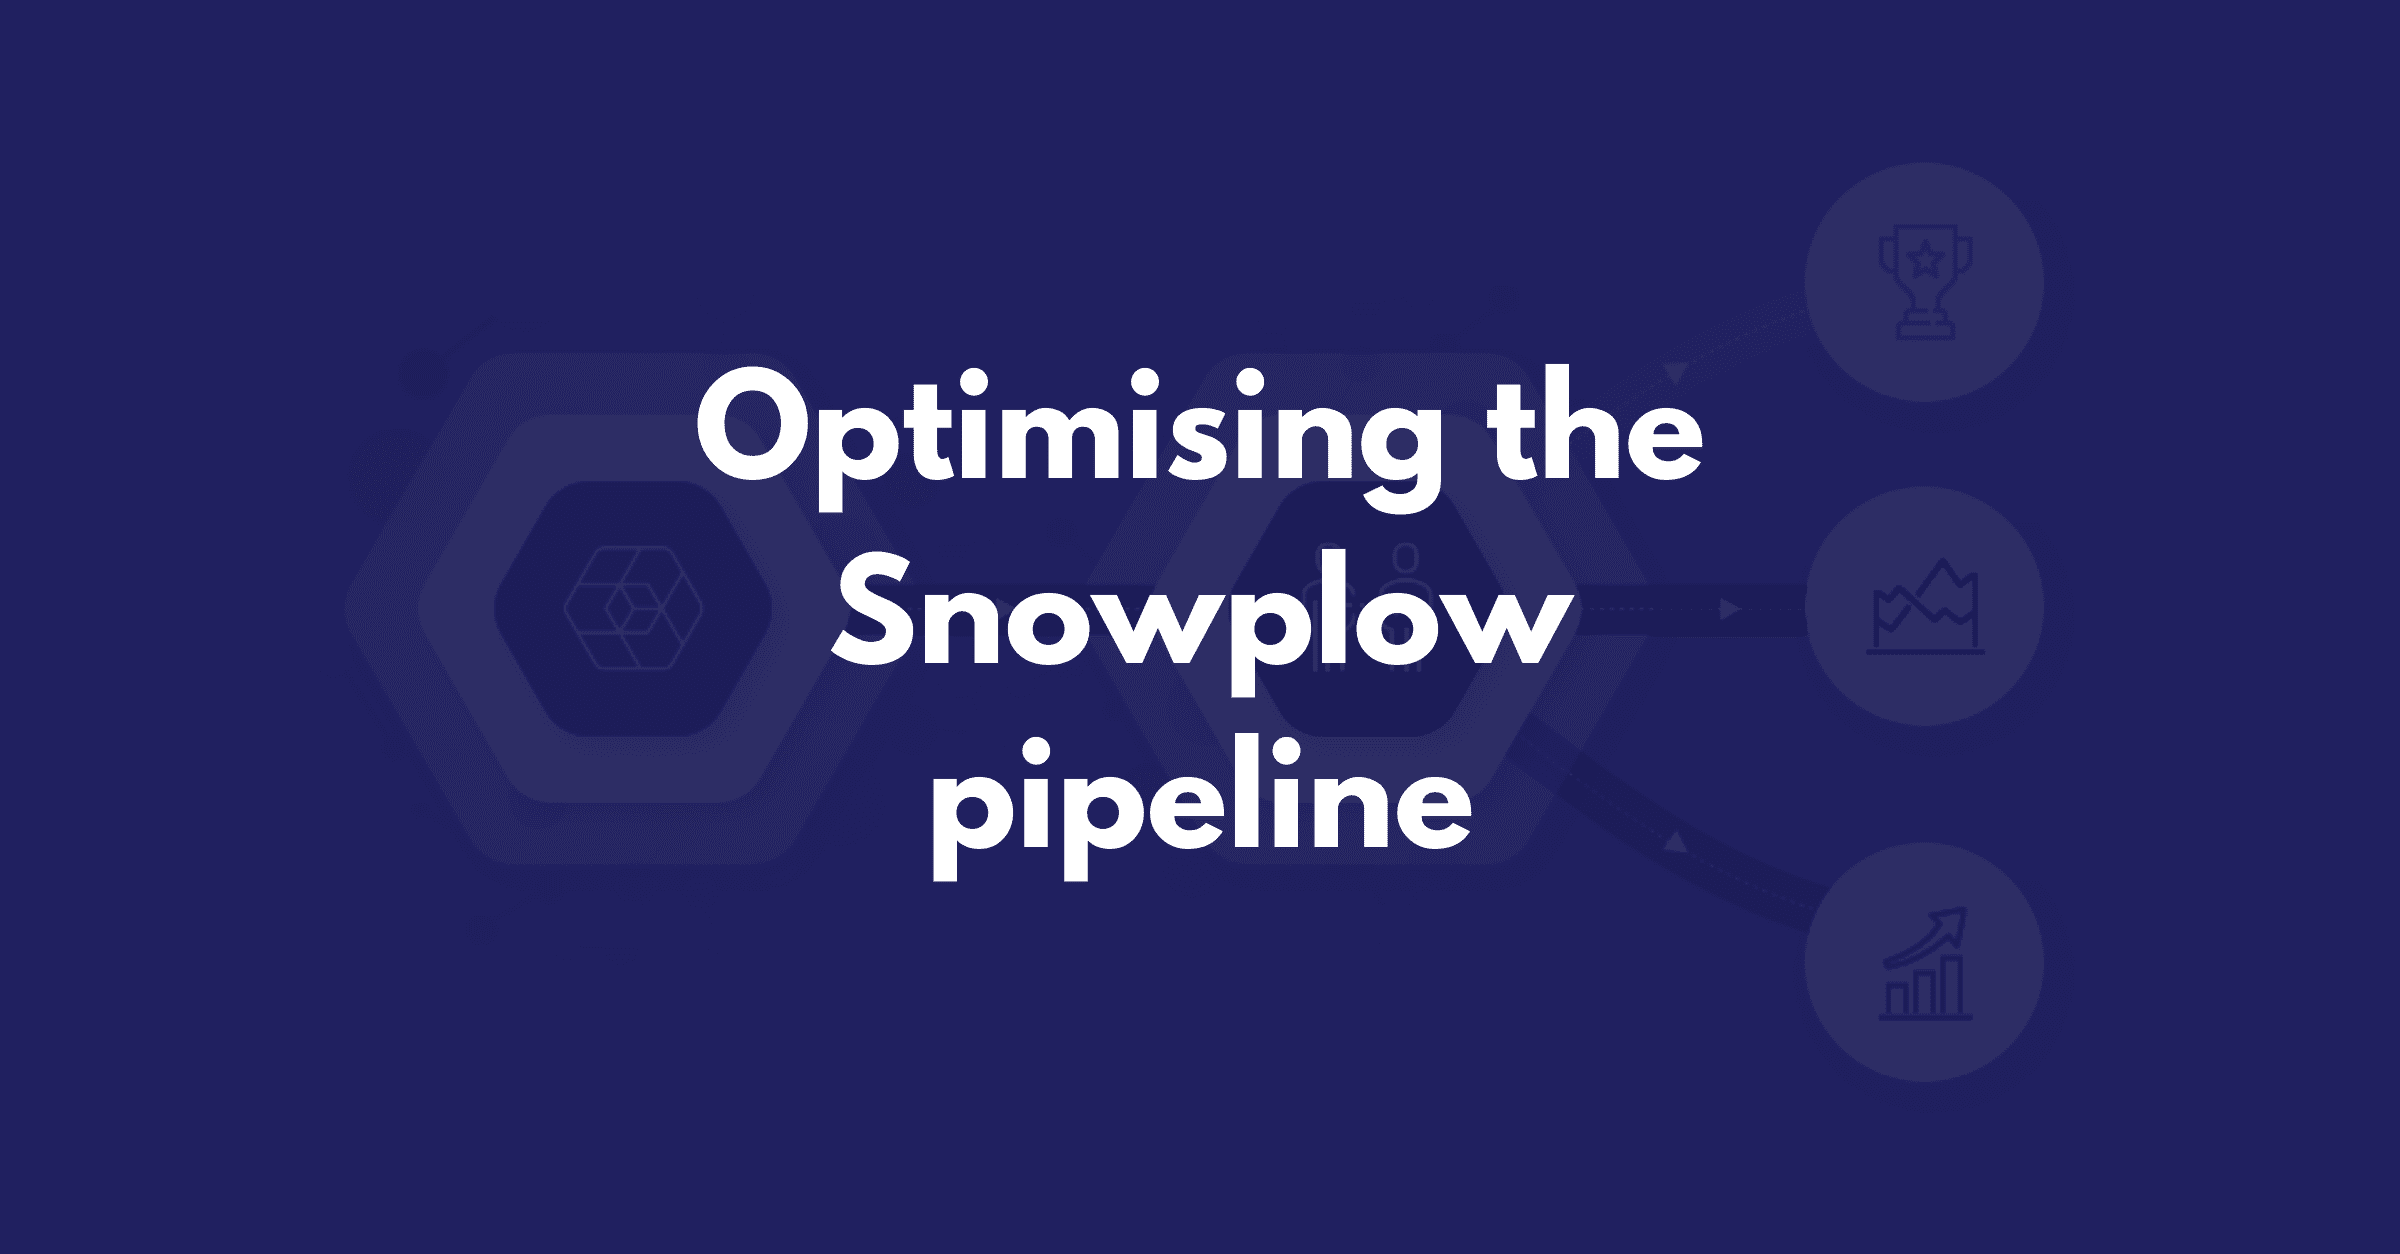 Optimising the Snowplow pipeline